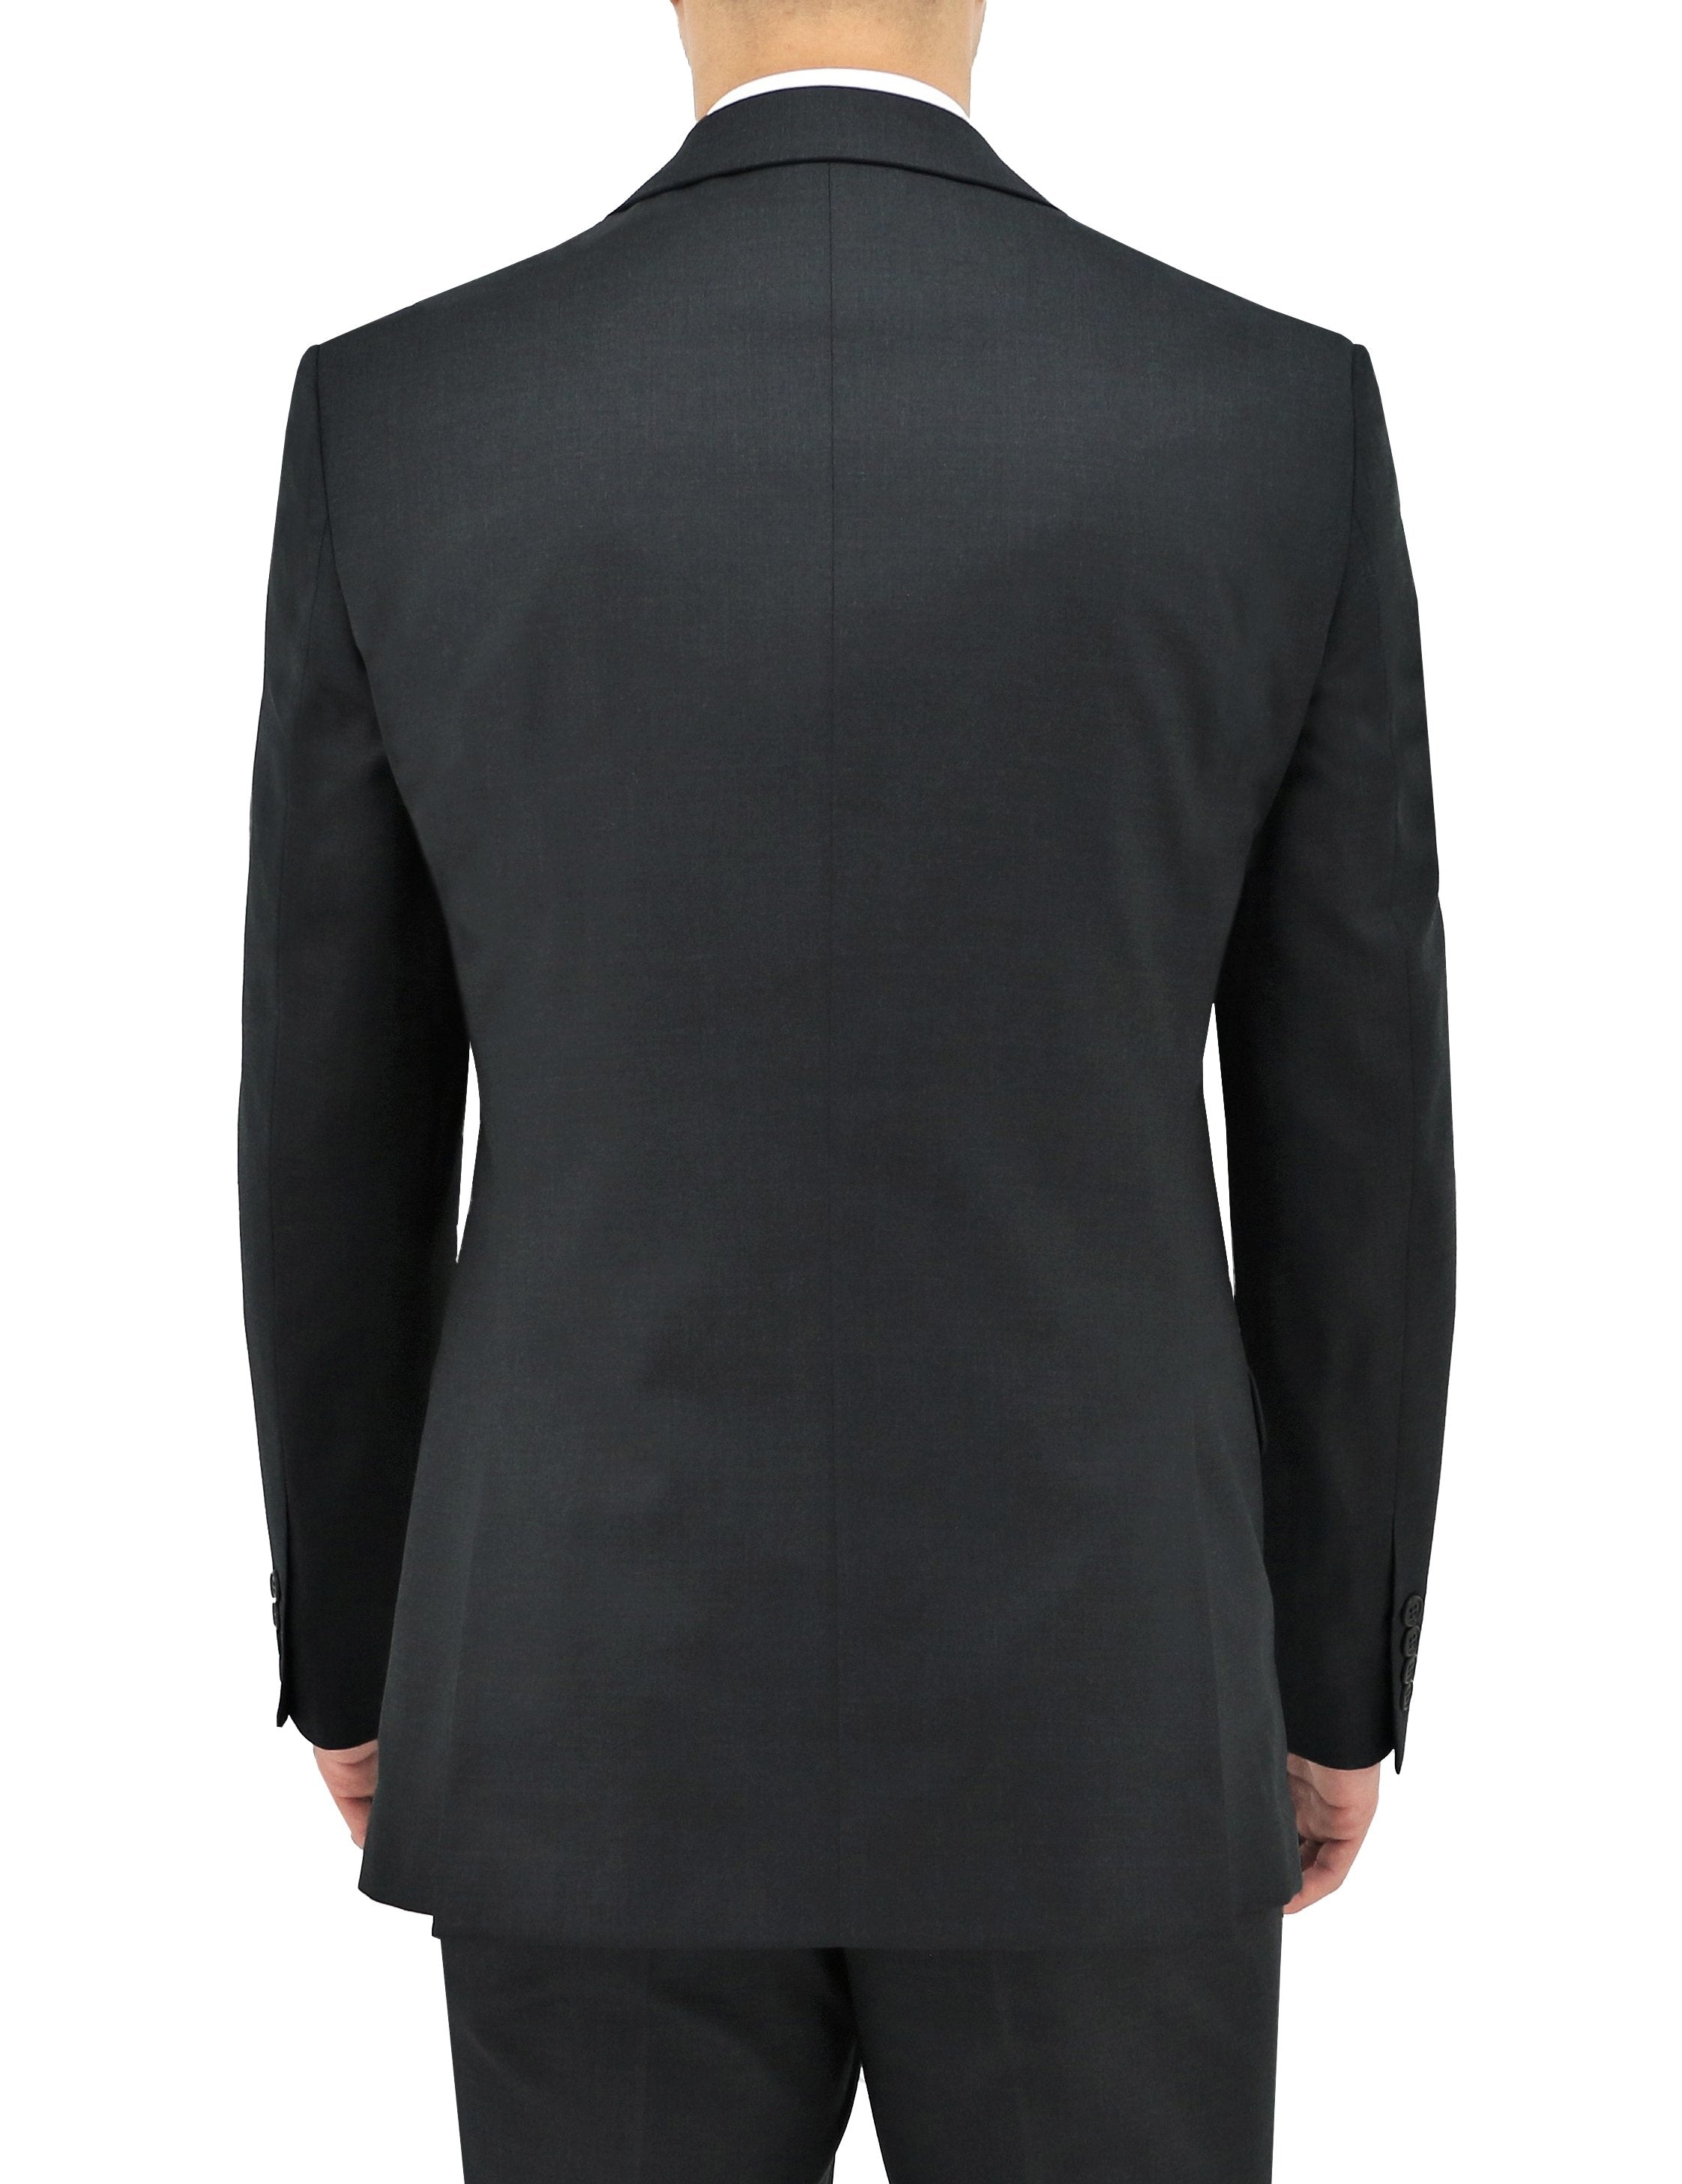 Michel 106 Charcoal Wool Suit Jacket